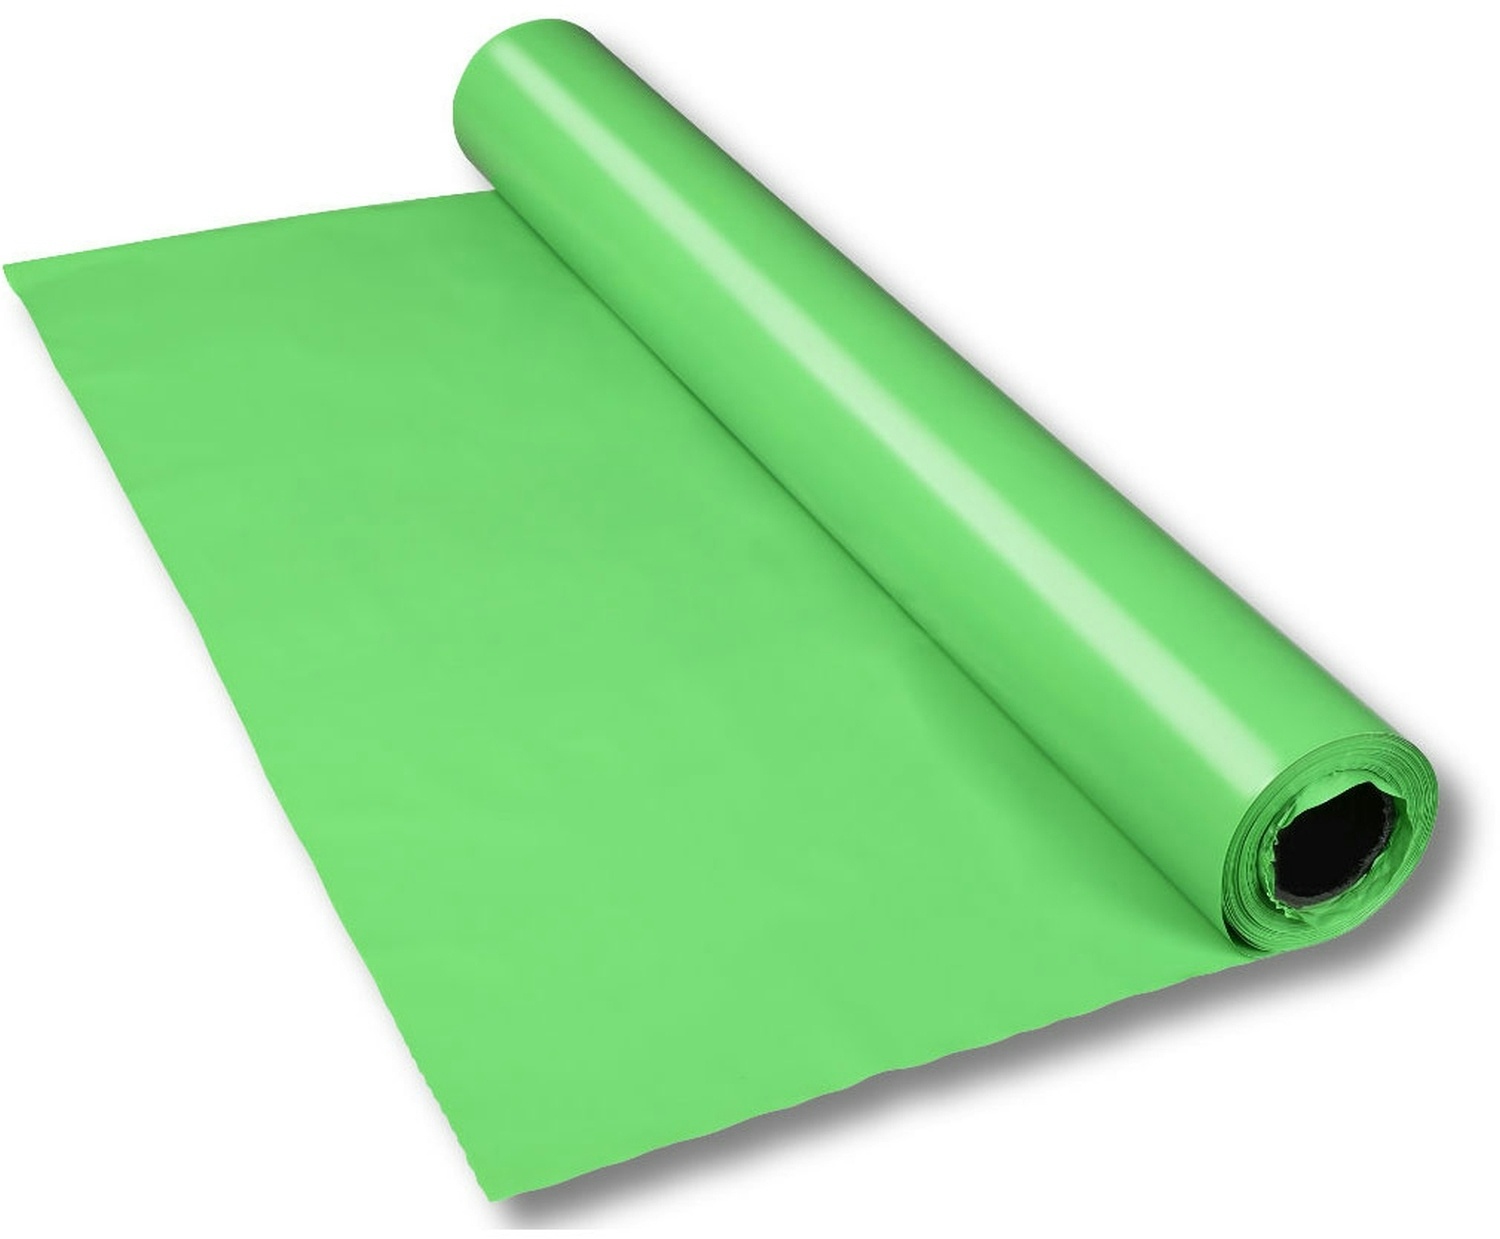 1x LDPE-Folie Dekofolie Tischdecke grün opak 2300mm x 50m 100my